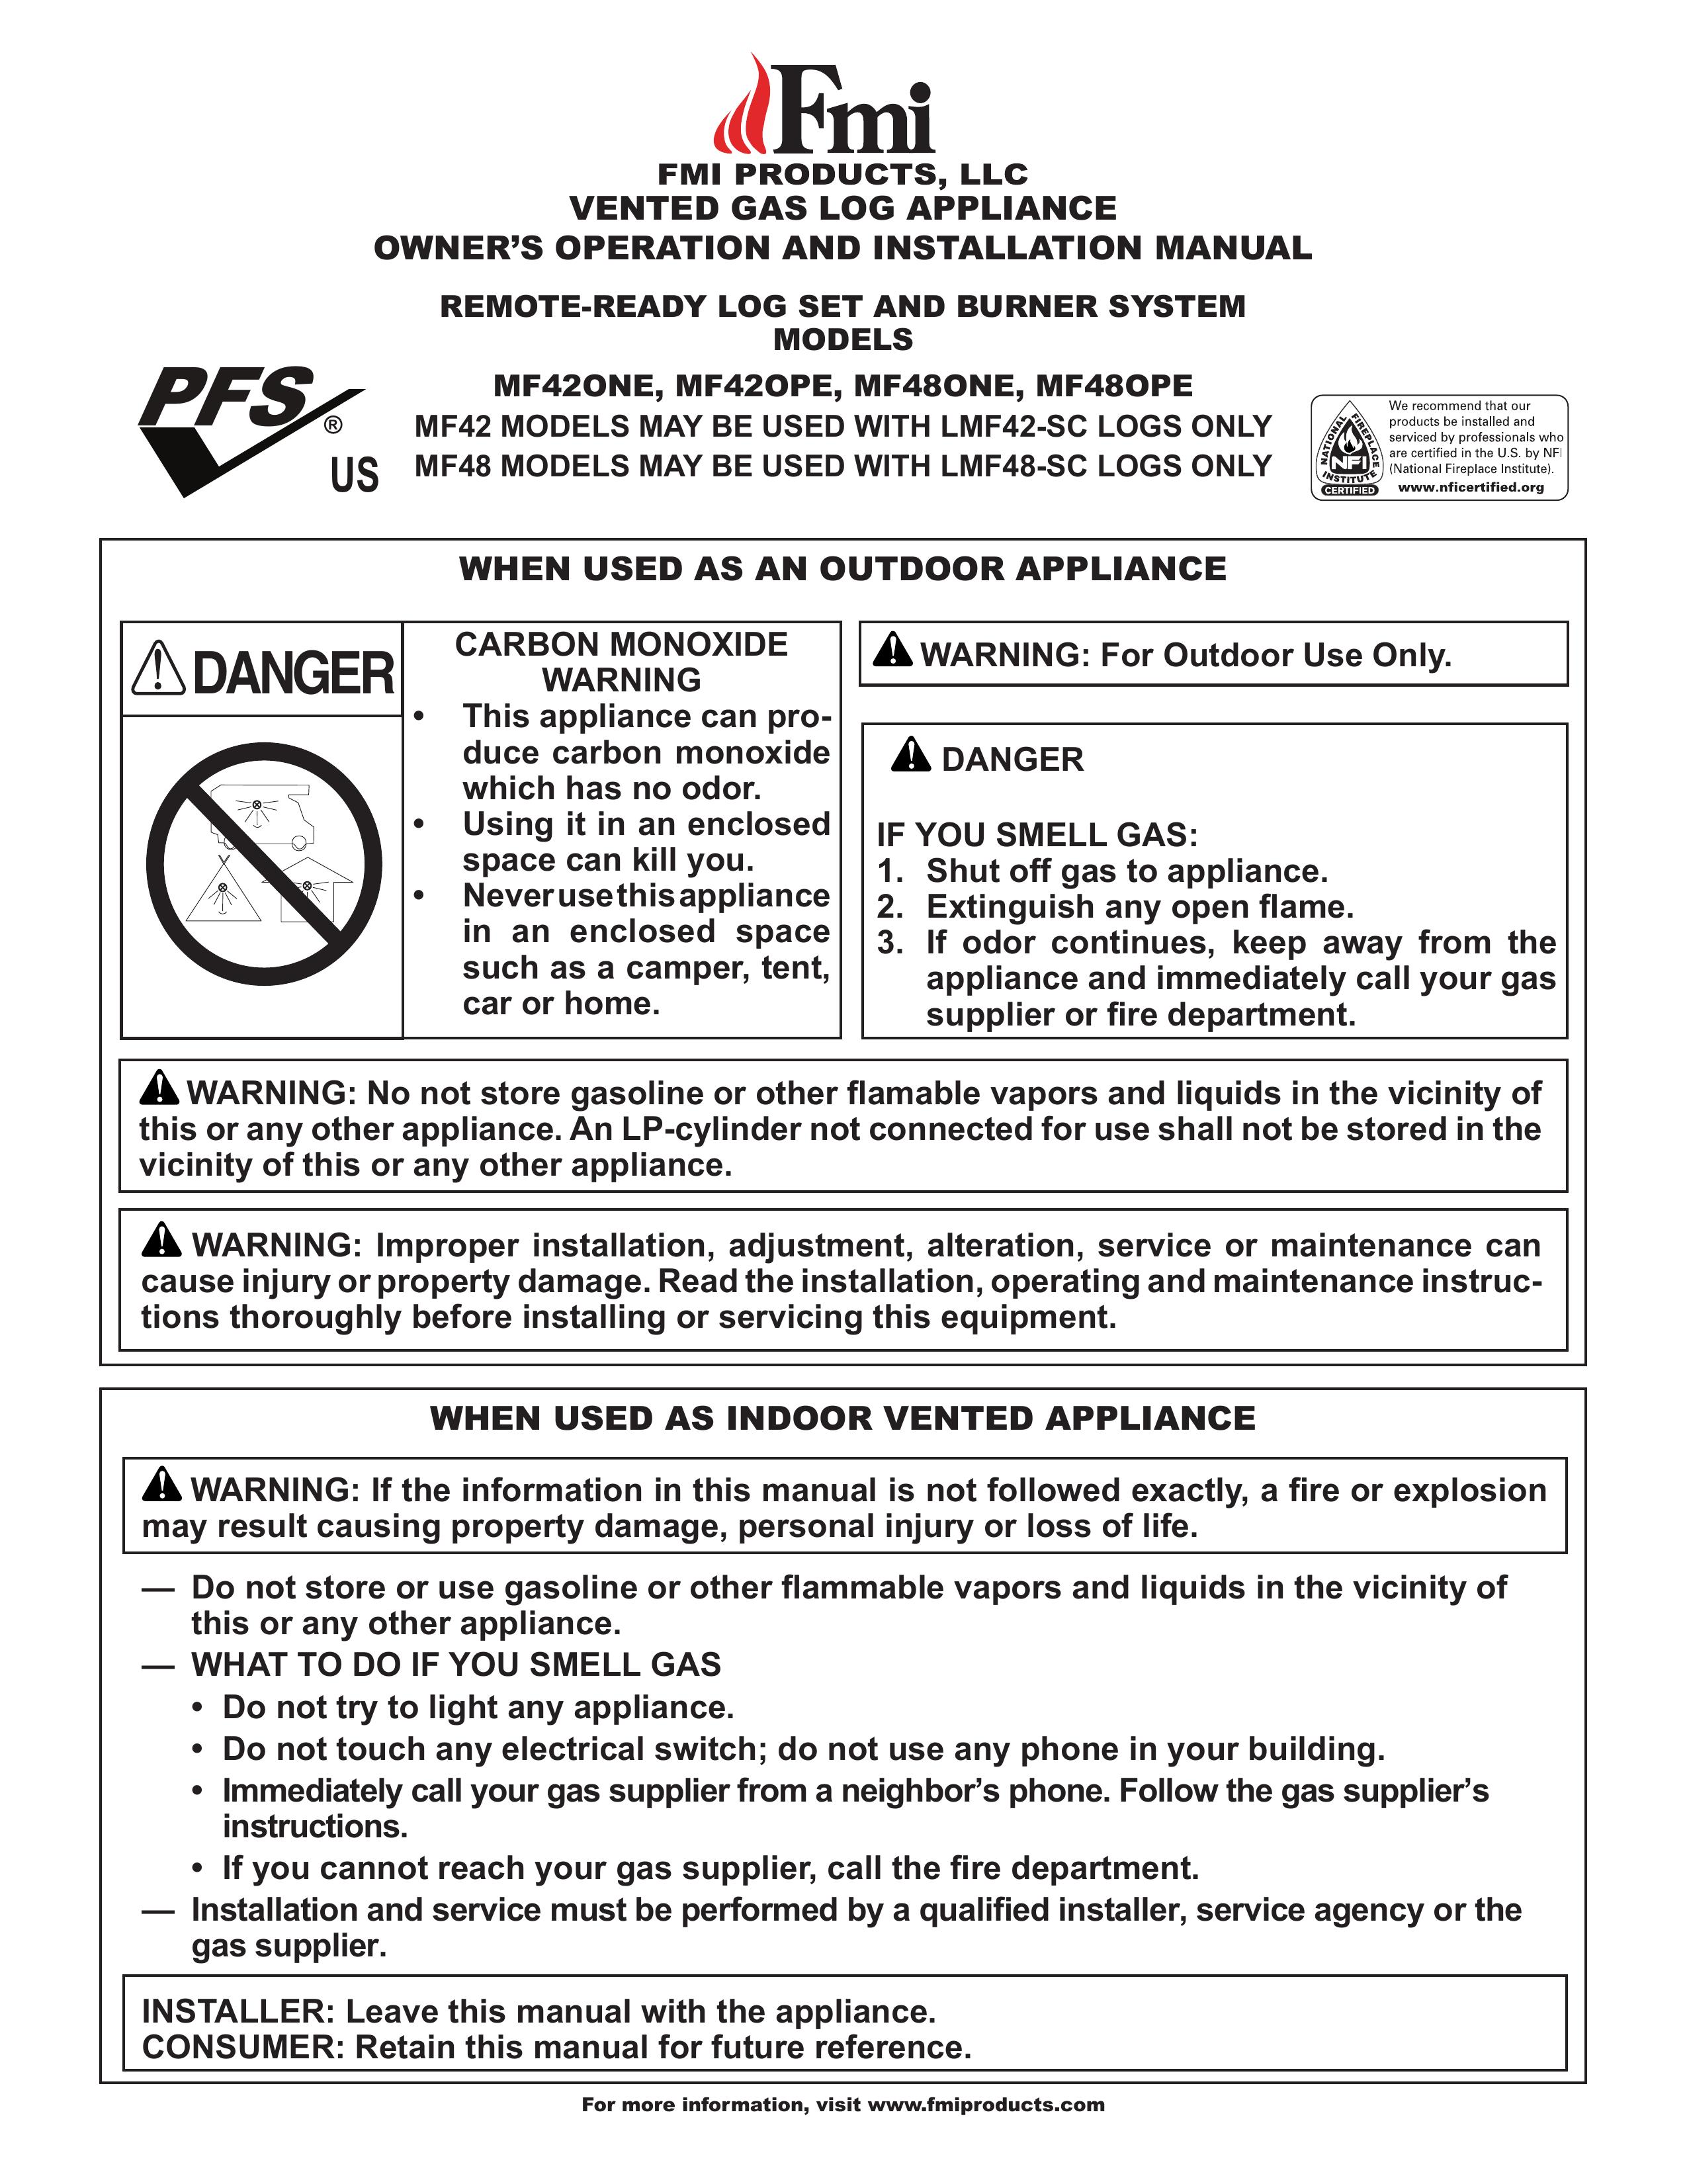 FMI MF48ONE Outdoor Gas Burner User Manual